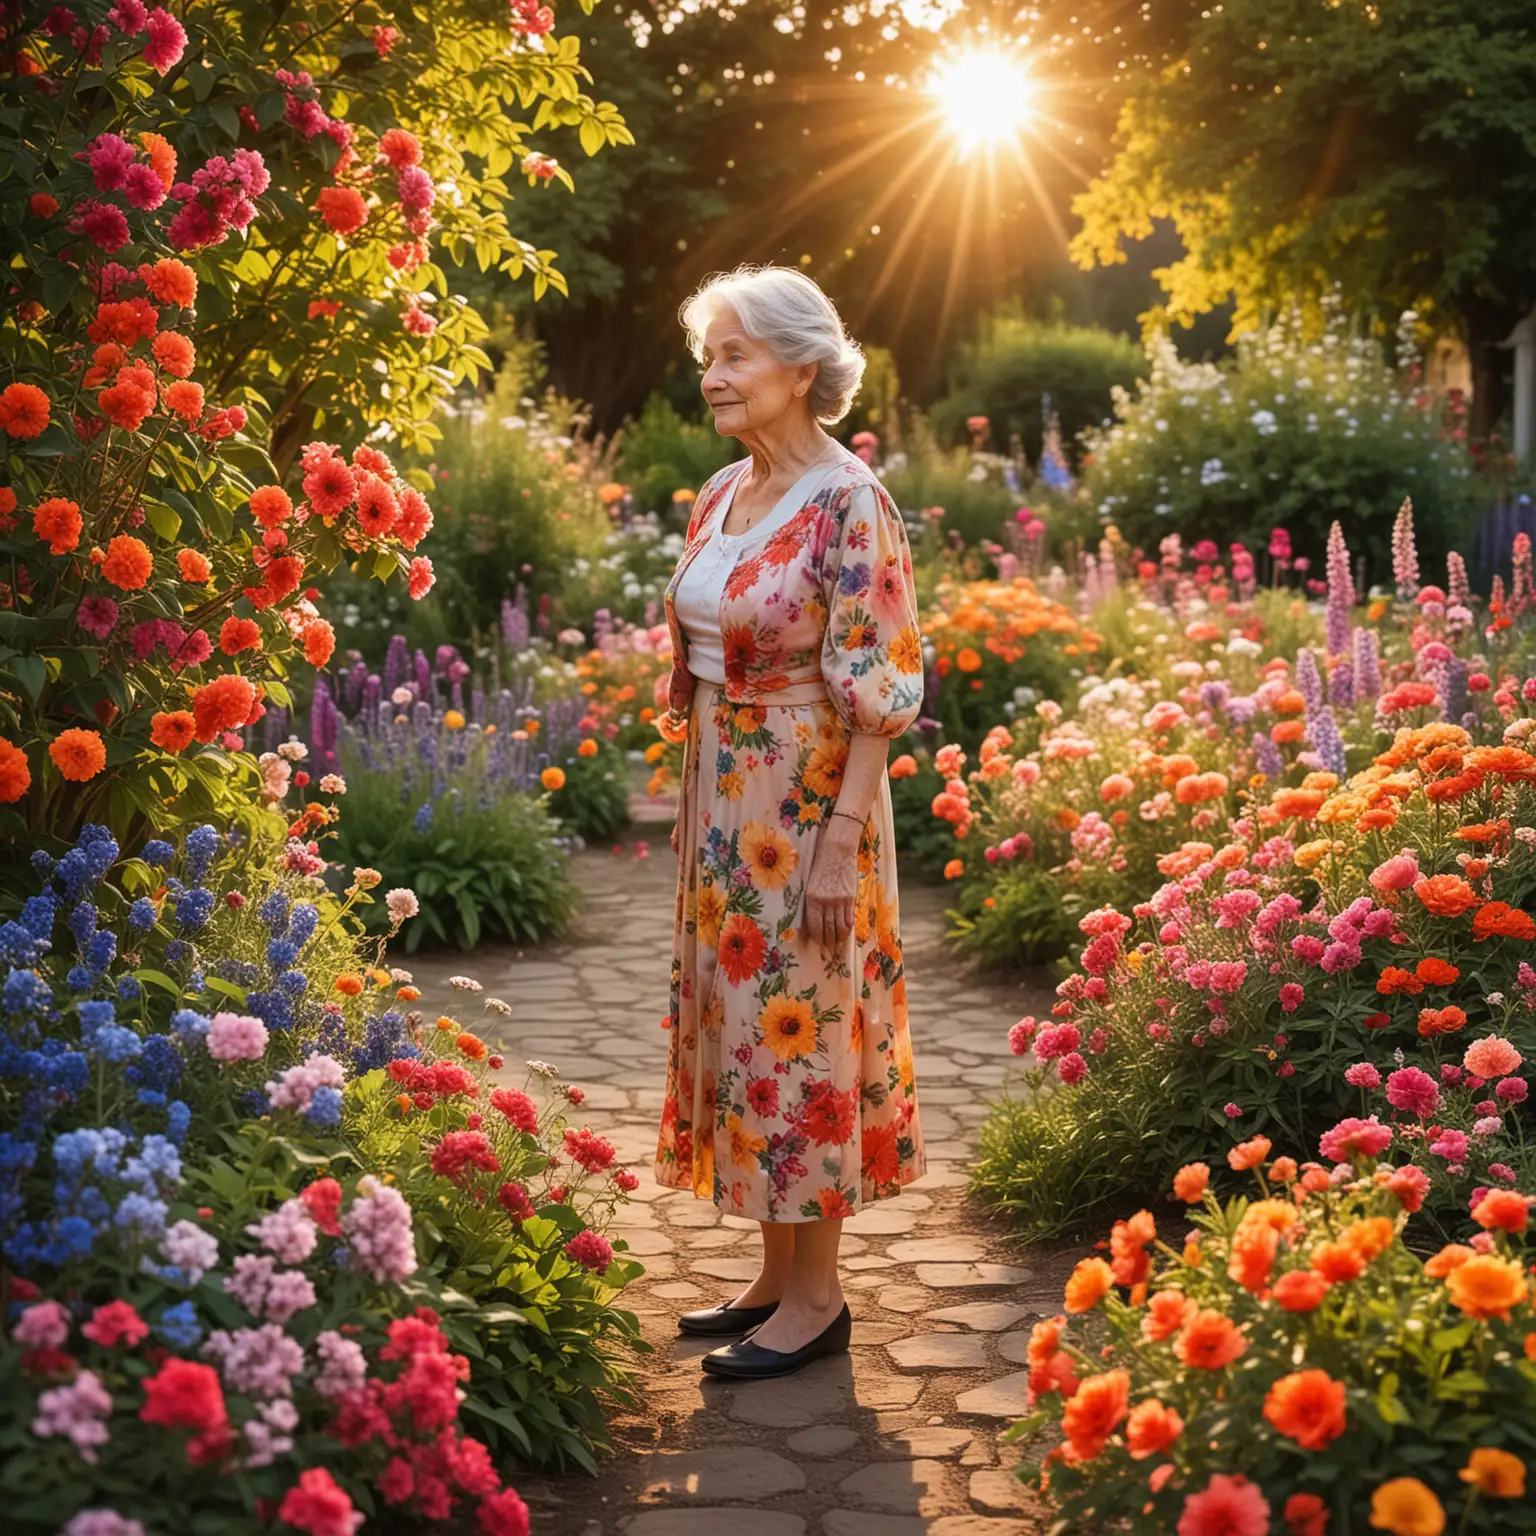 Elderly Woman in Vibrant Garden at Sunset